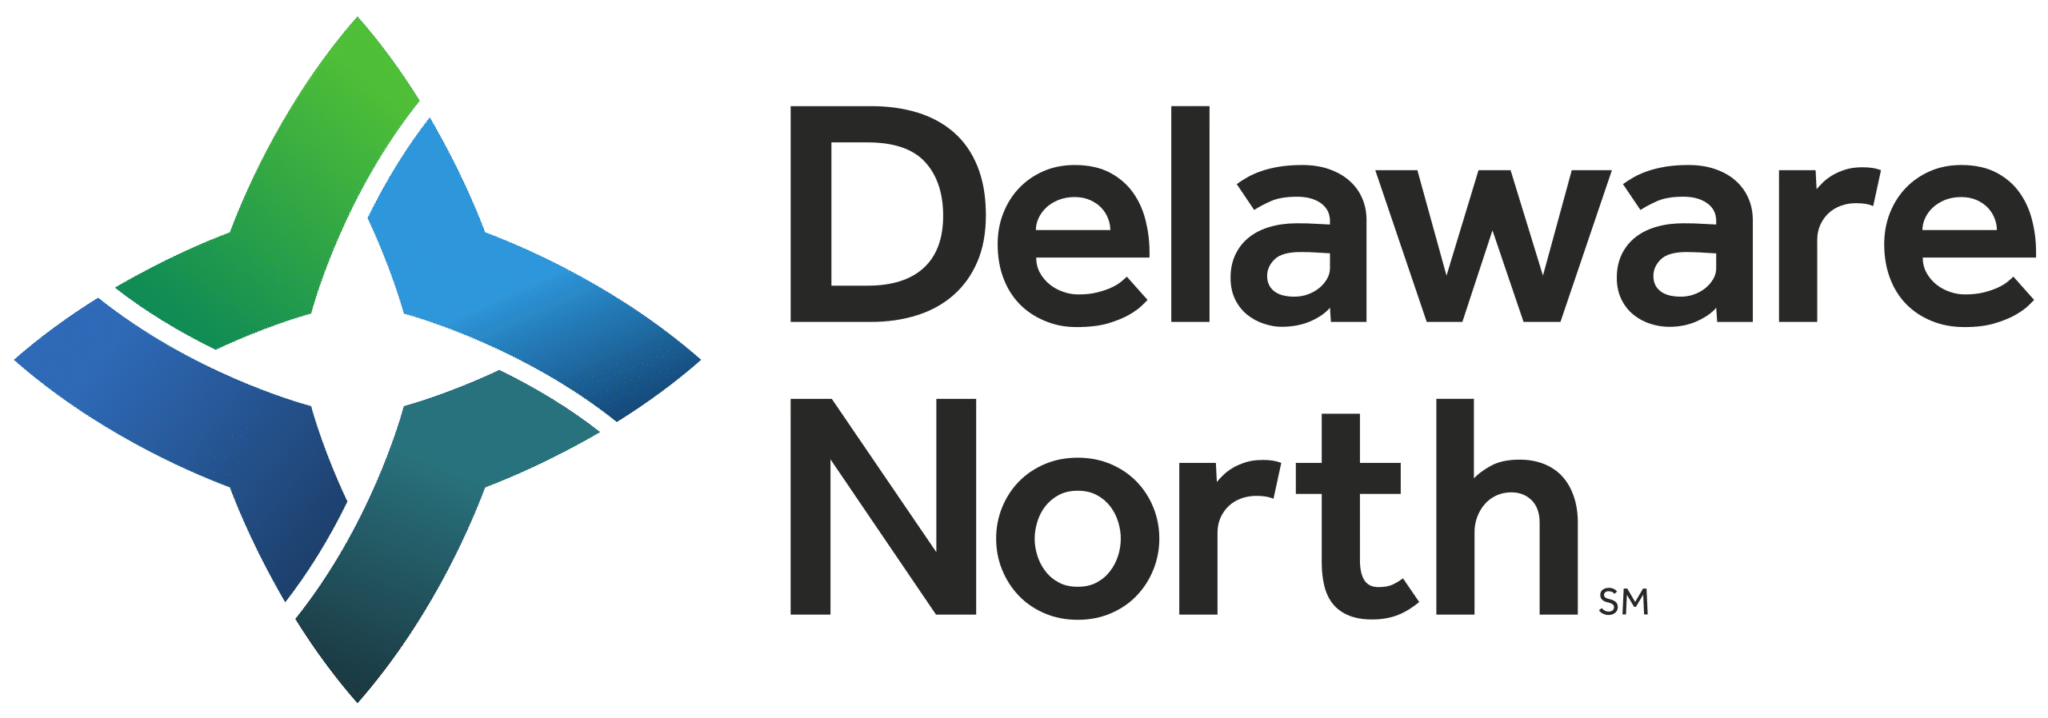 Delaware n logo